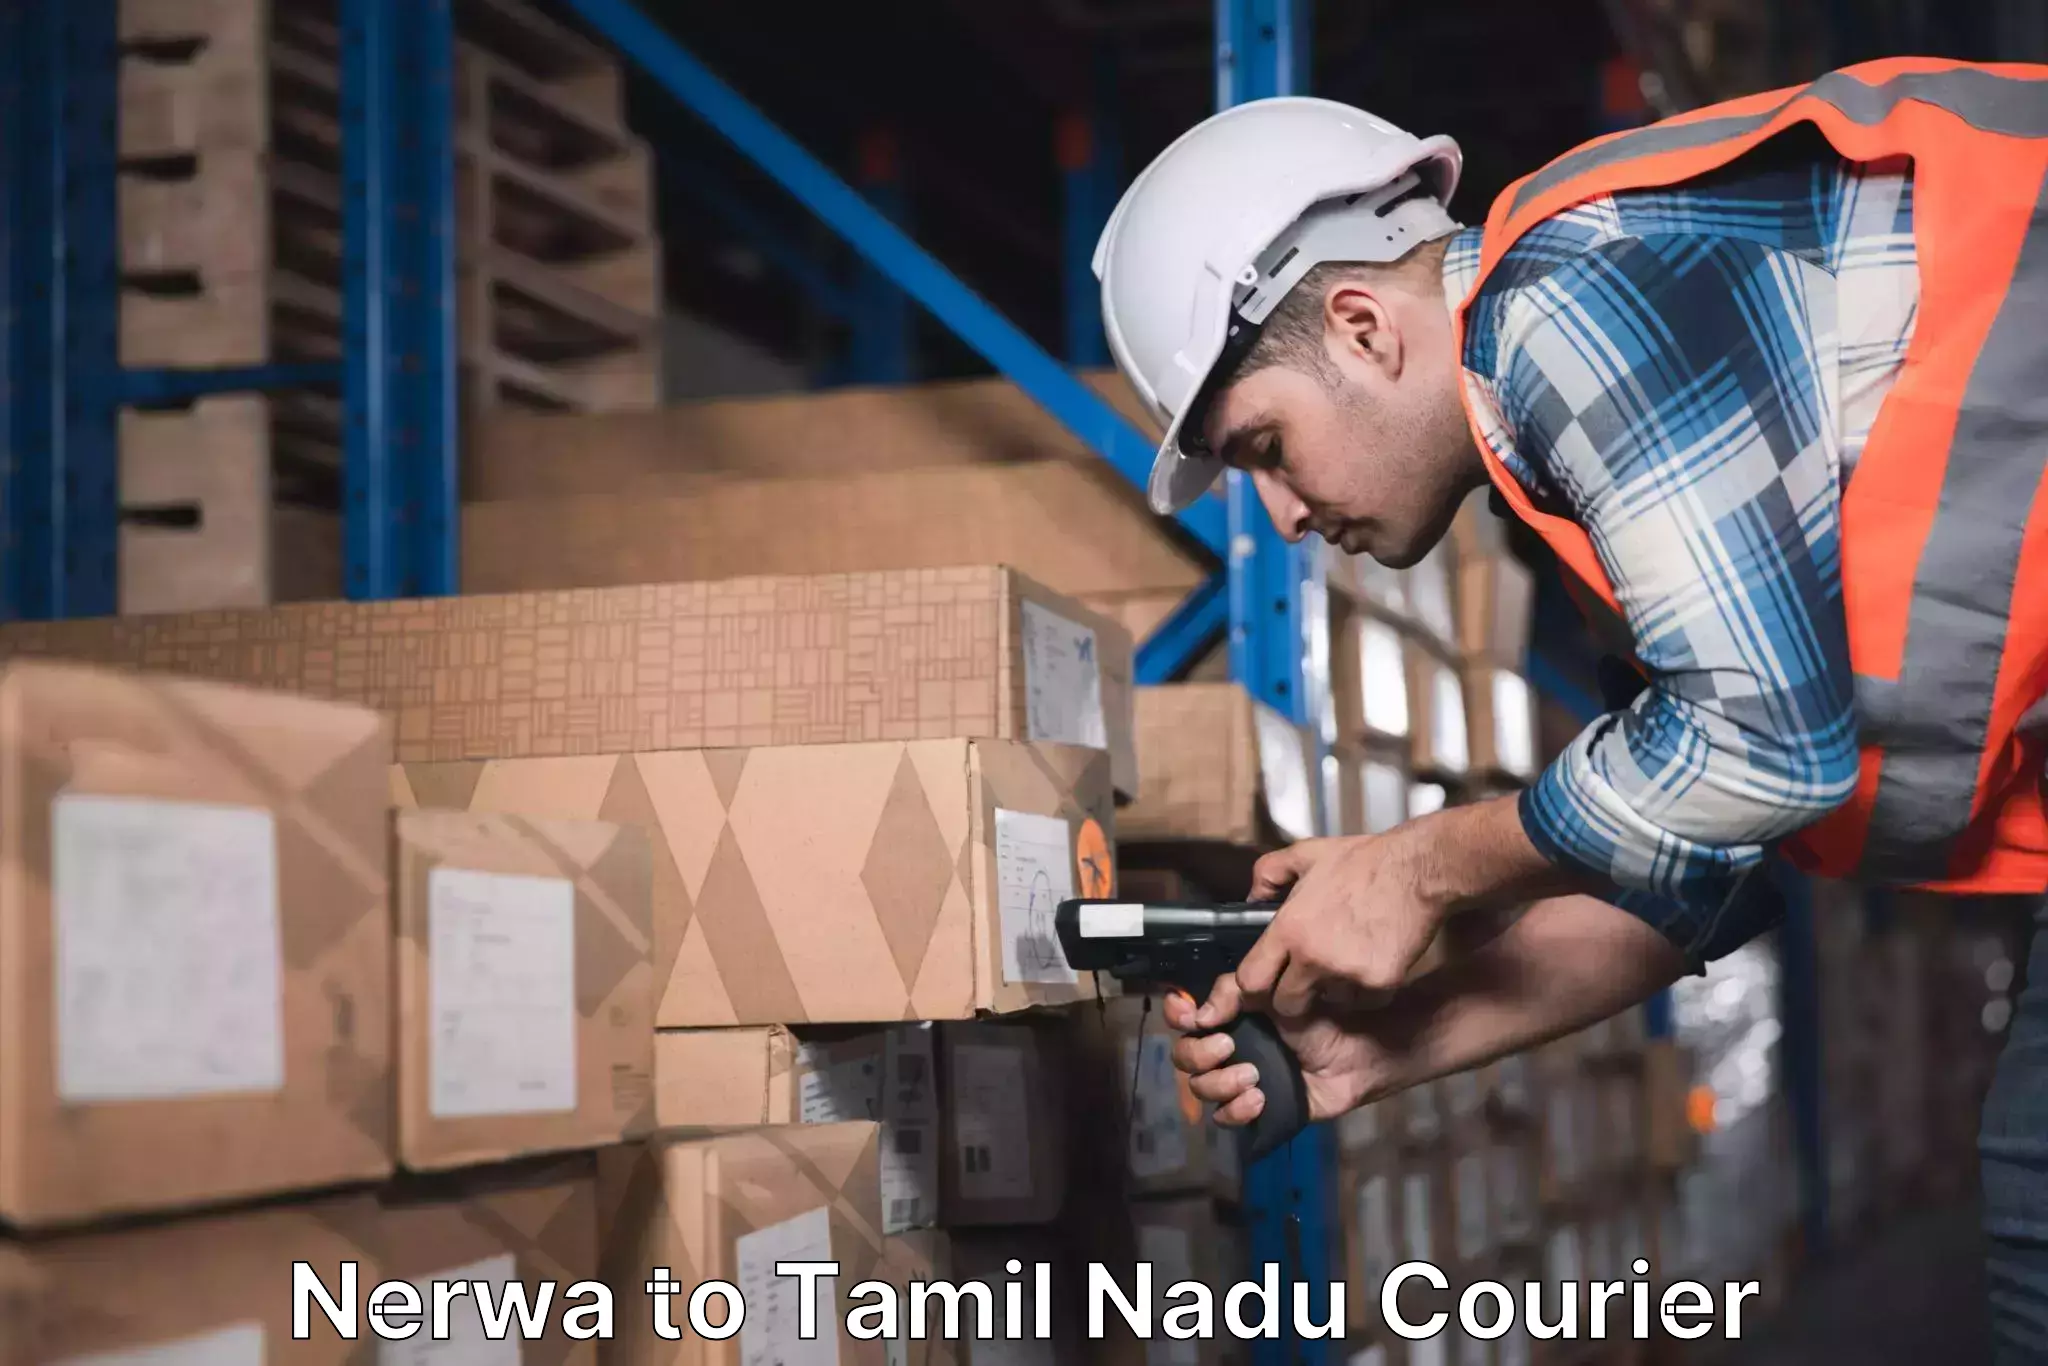 Courier service booking Nerwa to Chennai Port